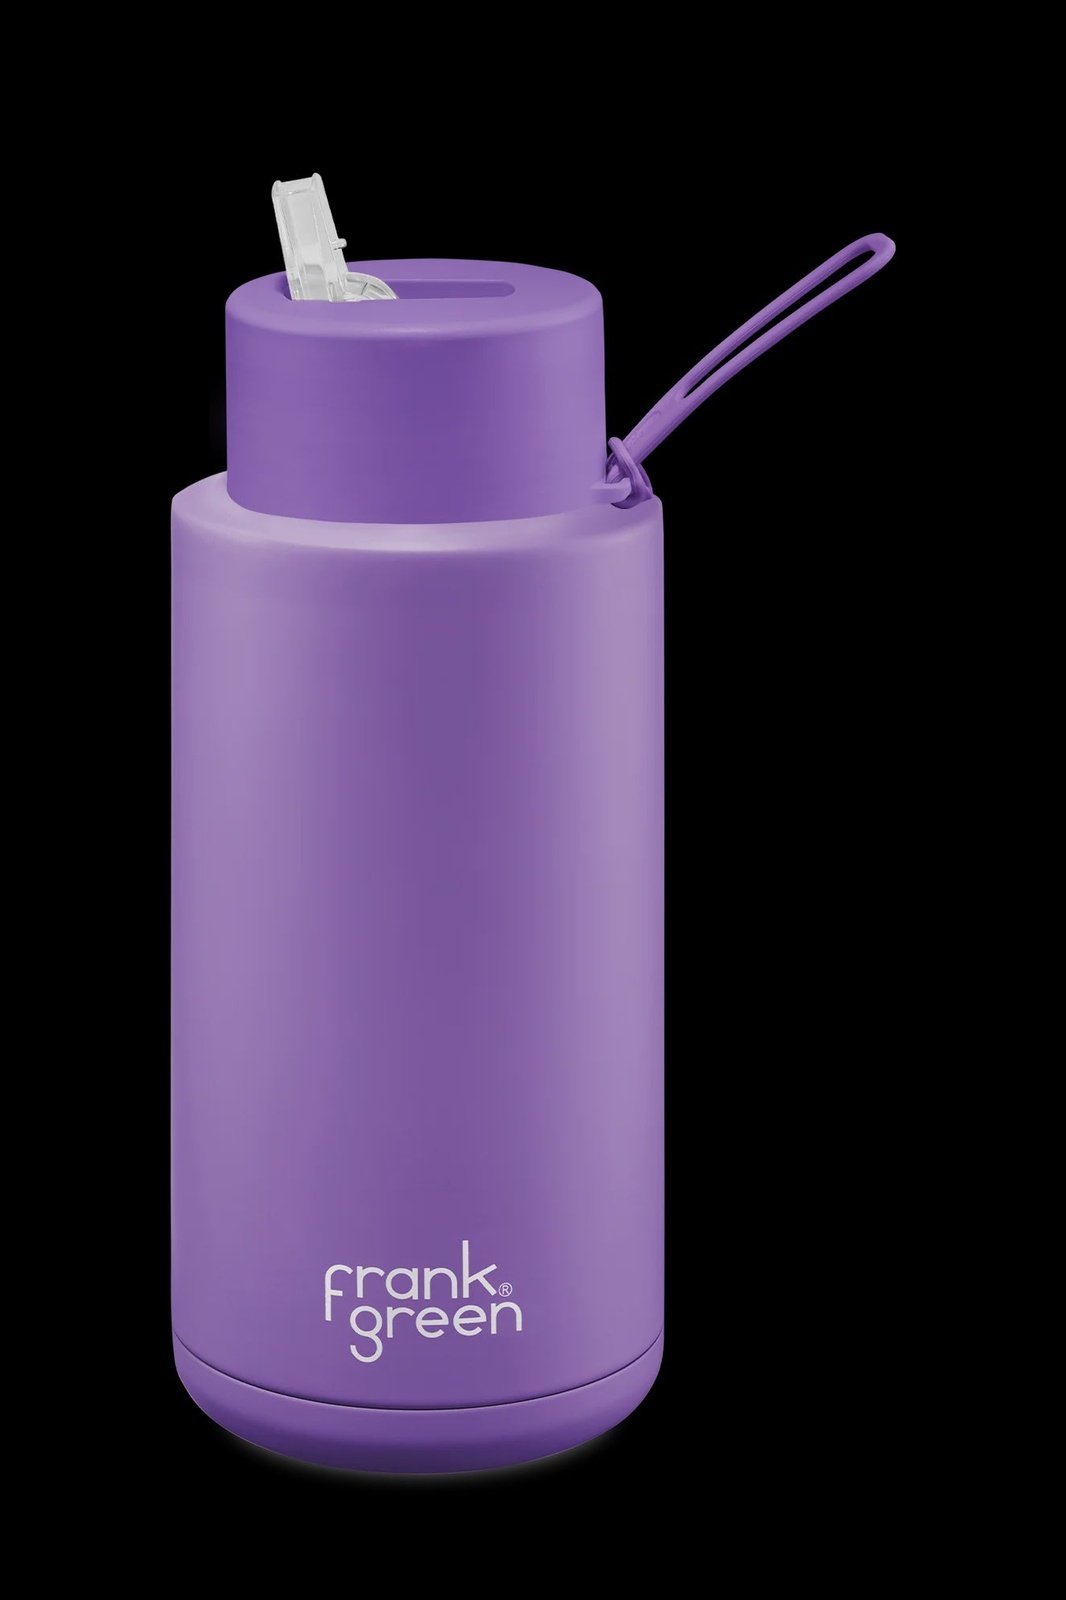 Frank green - limited edition ceramic reusable bottle - 34oz / 1,000ml - cosmic purple